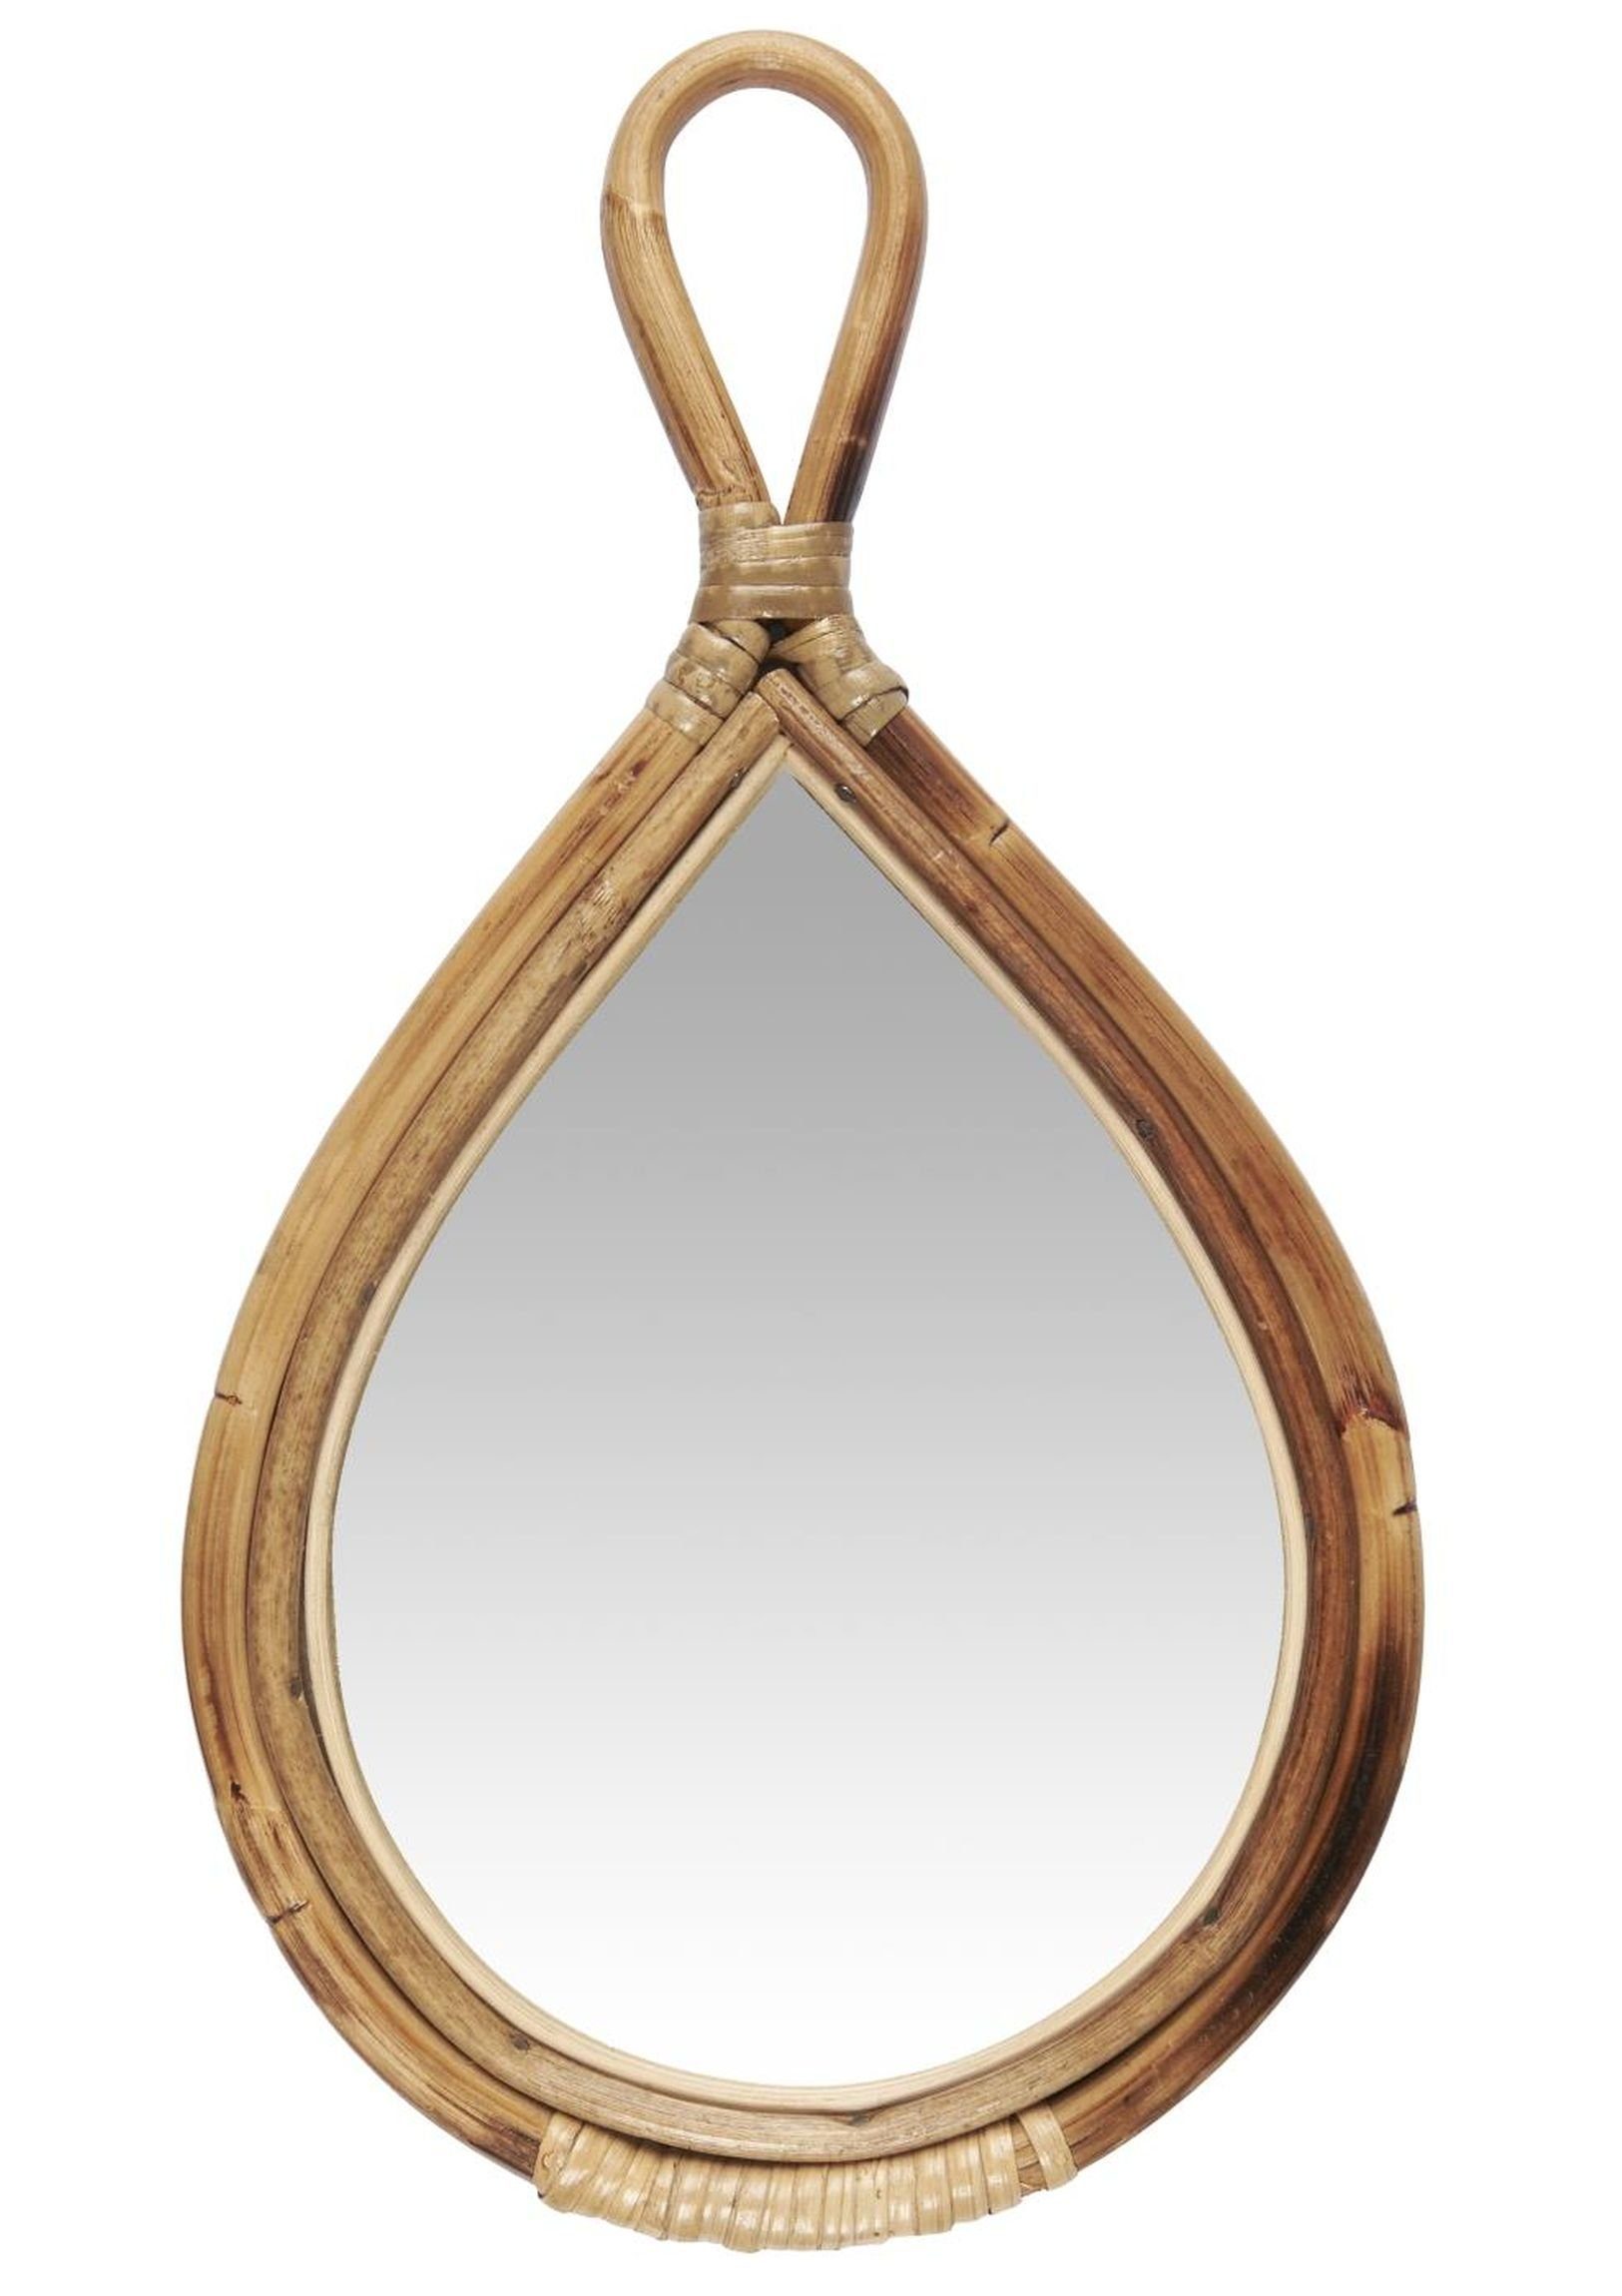 Ib Laursen Spiegel Spiegel Handspiegel Oval Laursen 9129-30 L Bambus Ib 35cm